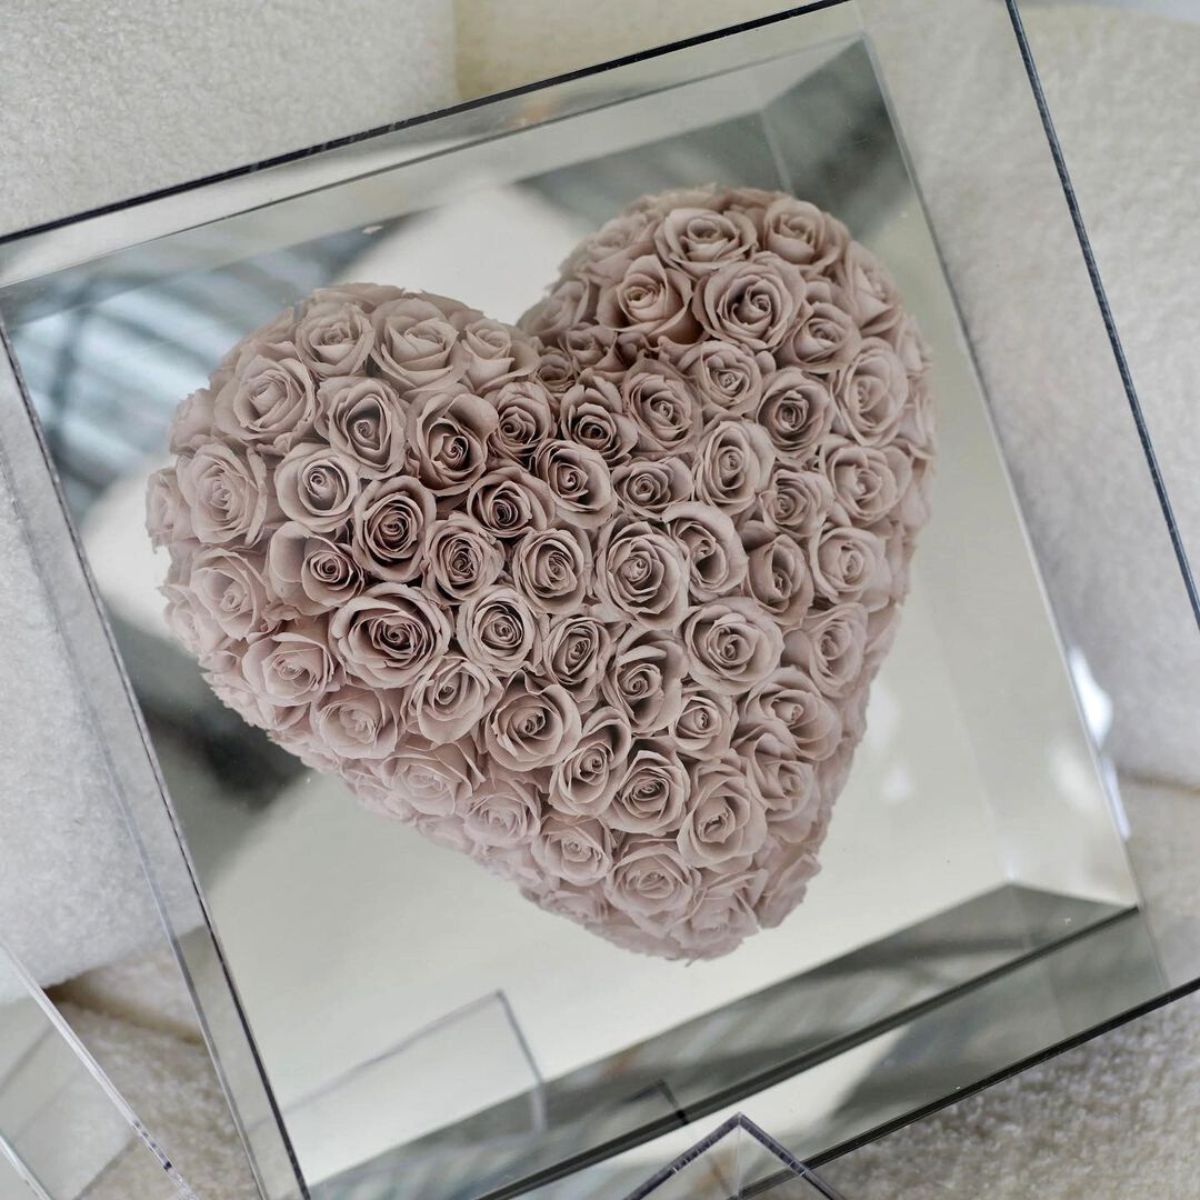 Heart shape arrangement using infinity roses